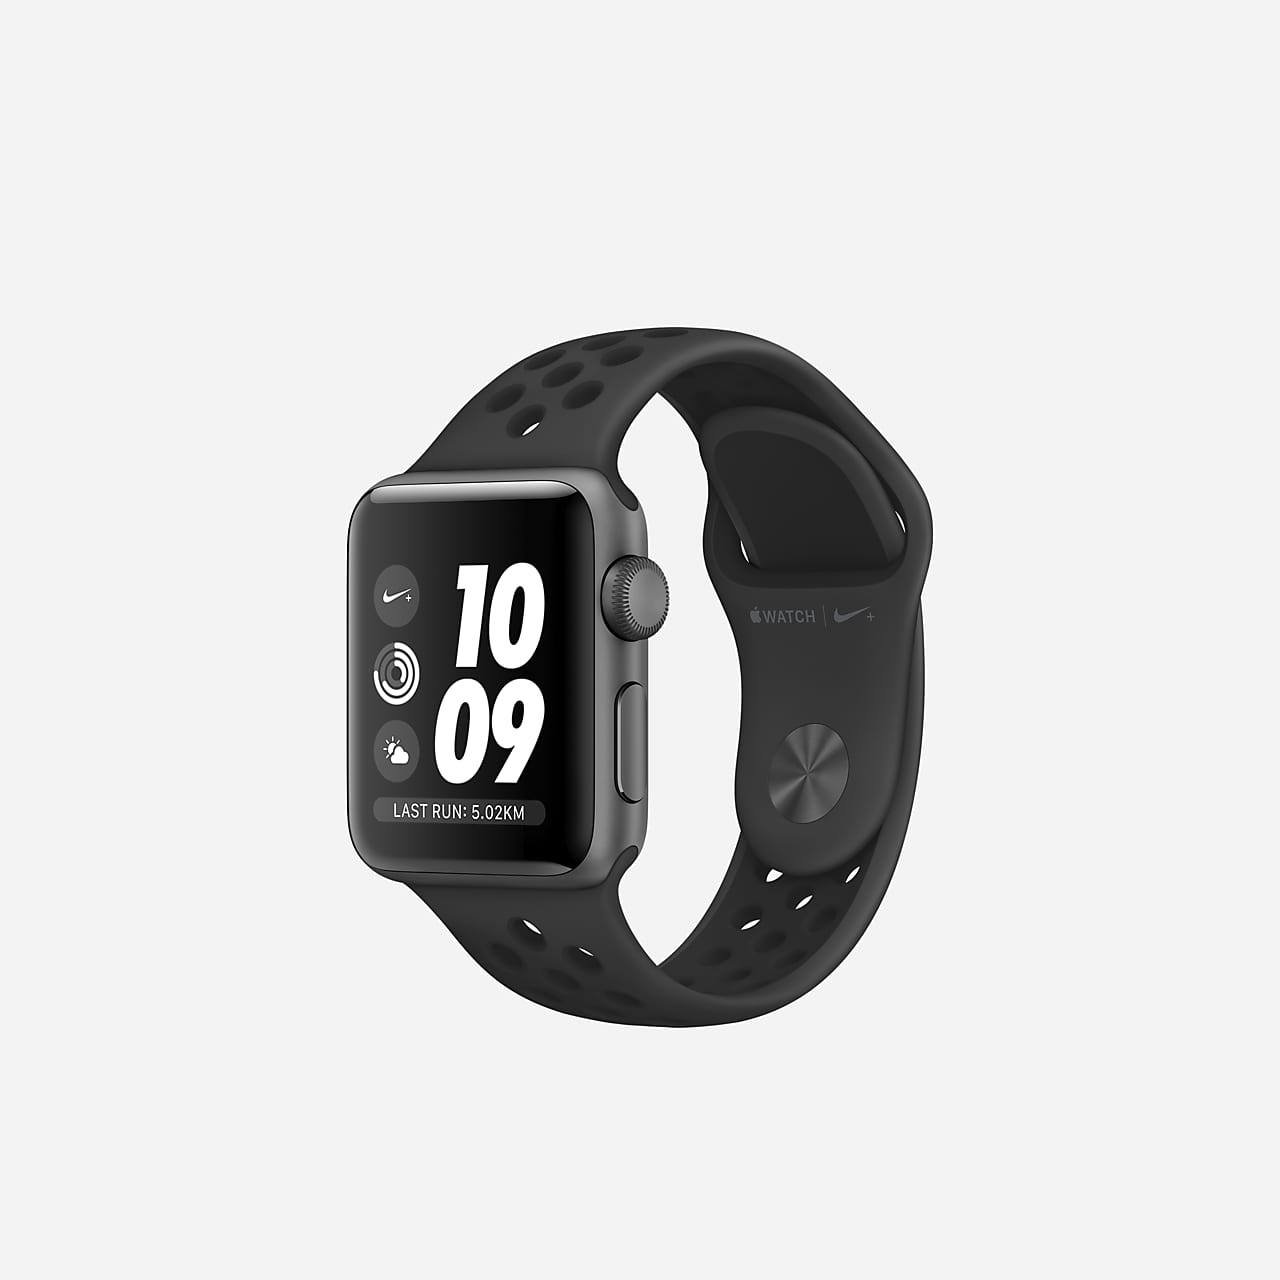 esposa Interprete El sendero Apple Watch Nike+ GPS Series 3 (38mm) Open Box Running Watch. Nike UK